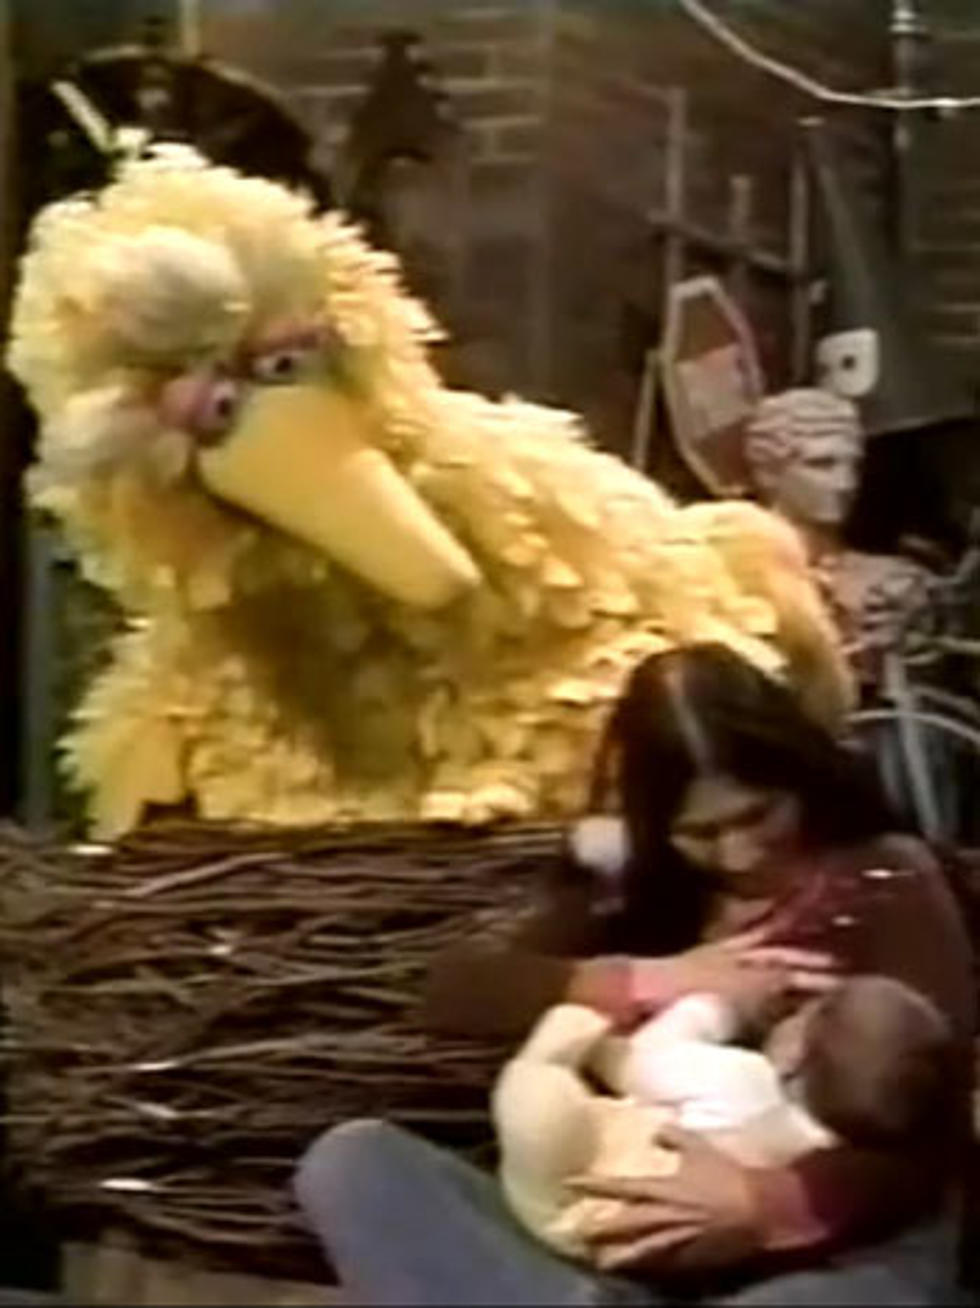 Should Sesame Street Feature Breastfeeding Again? [POLL]